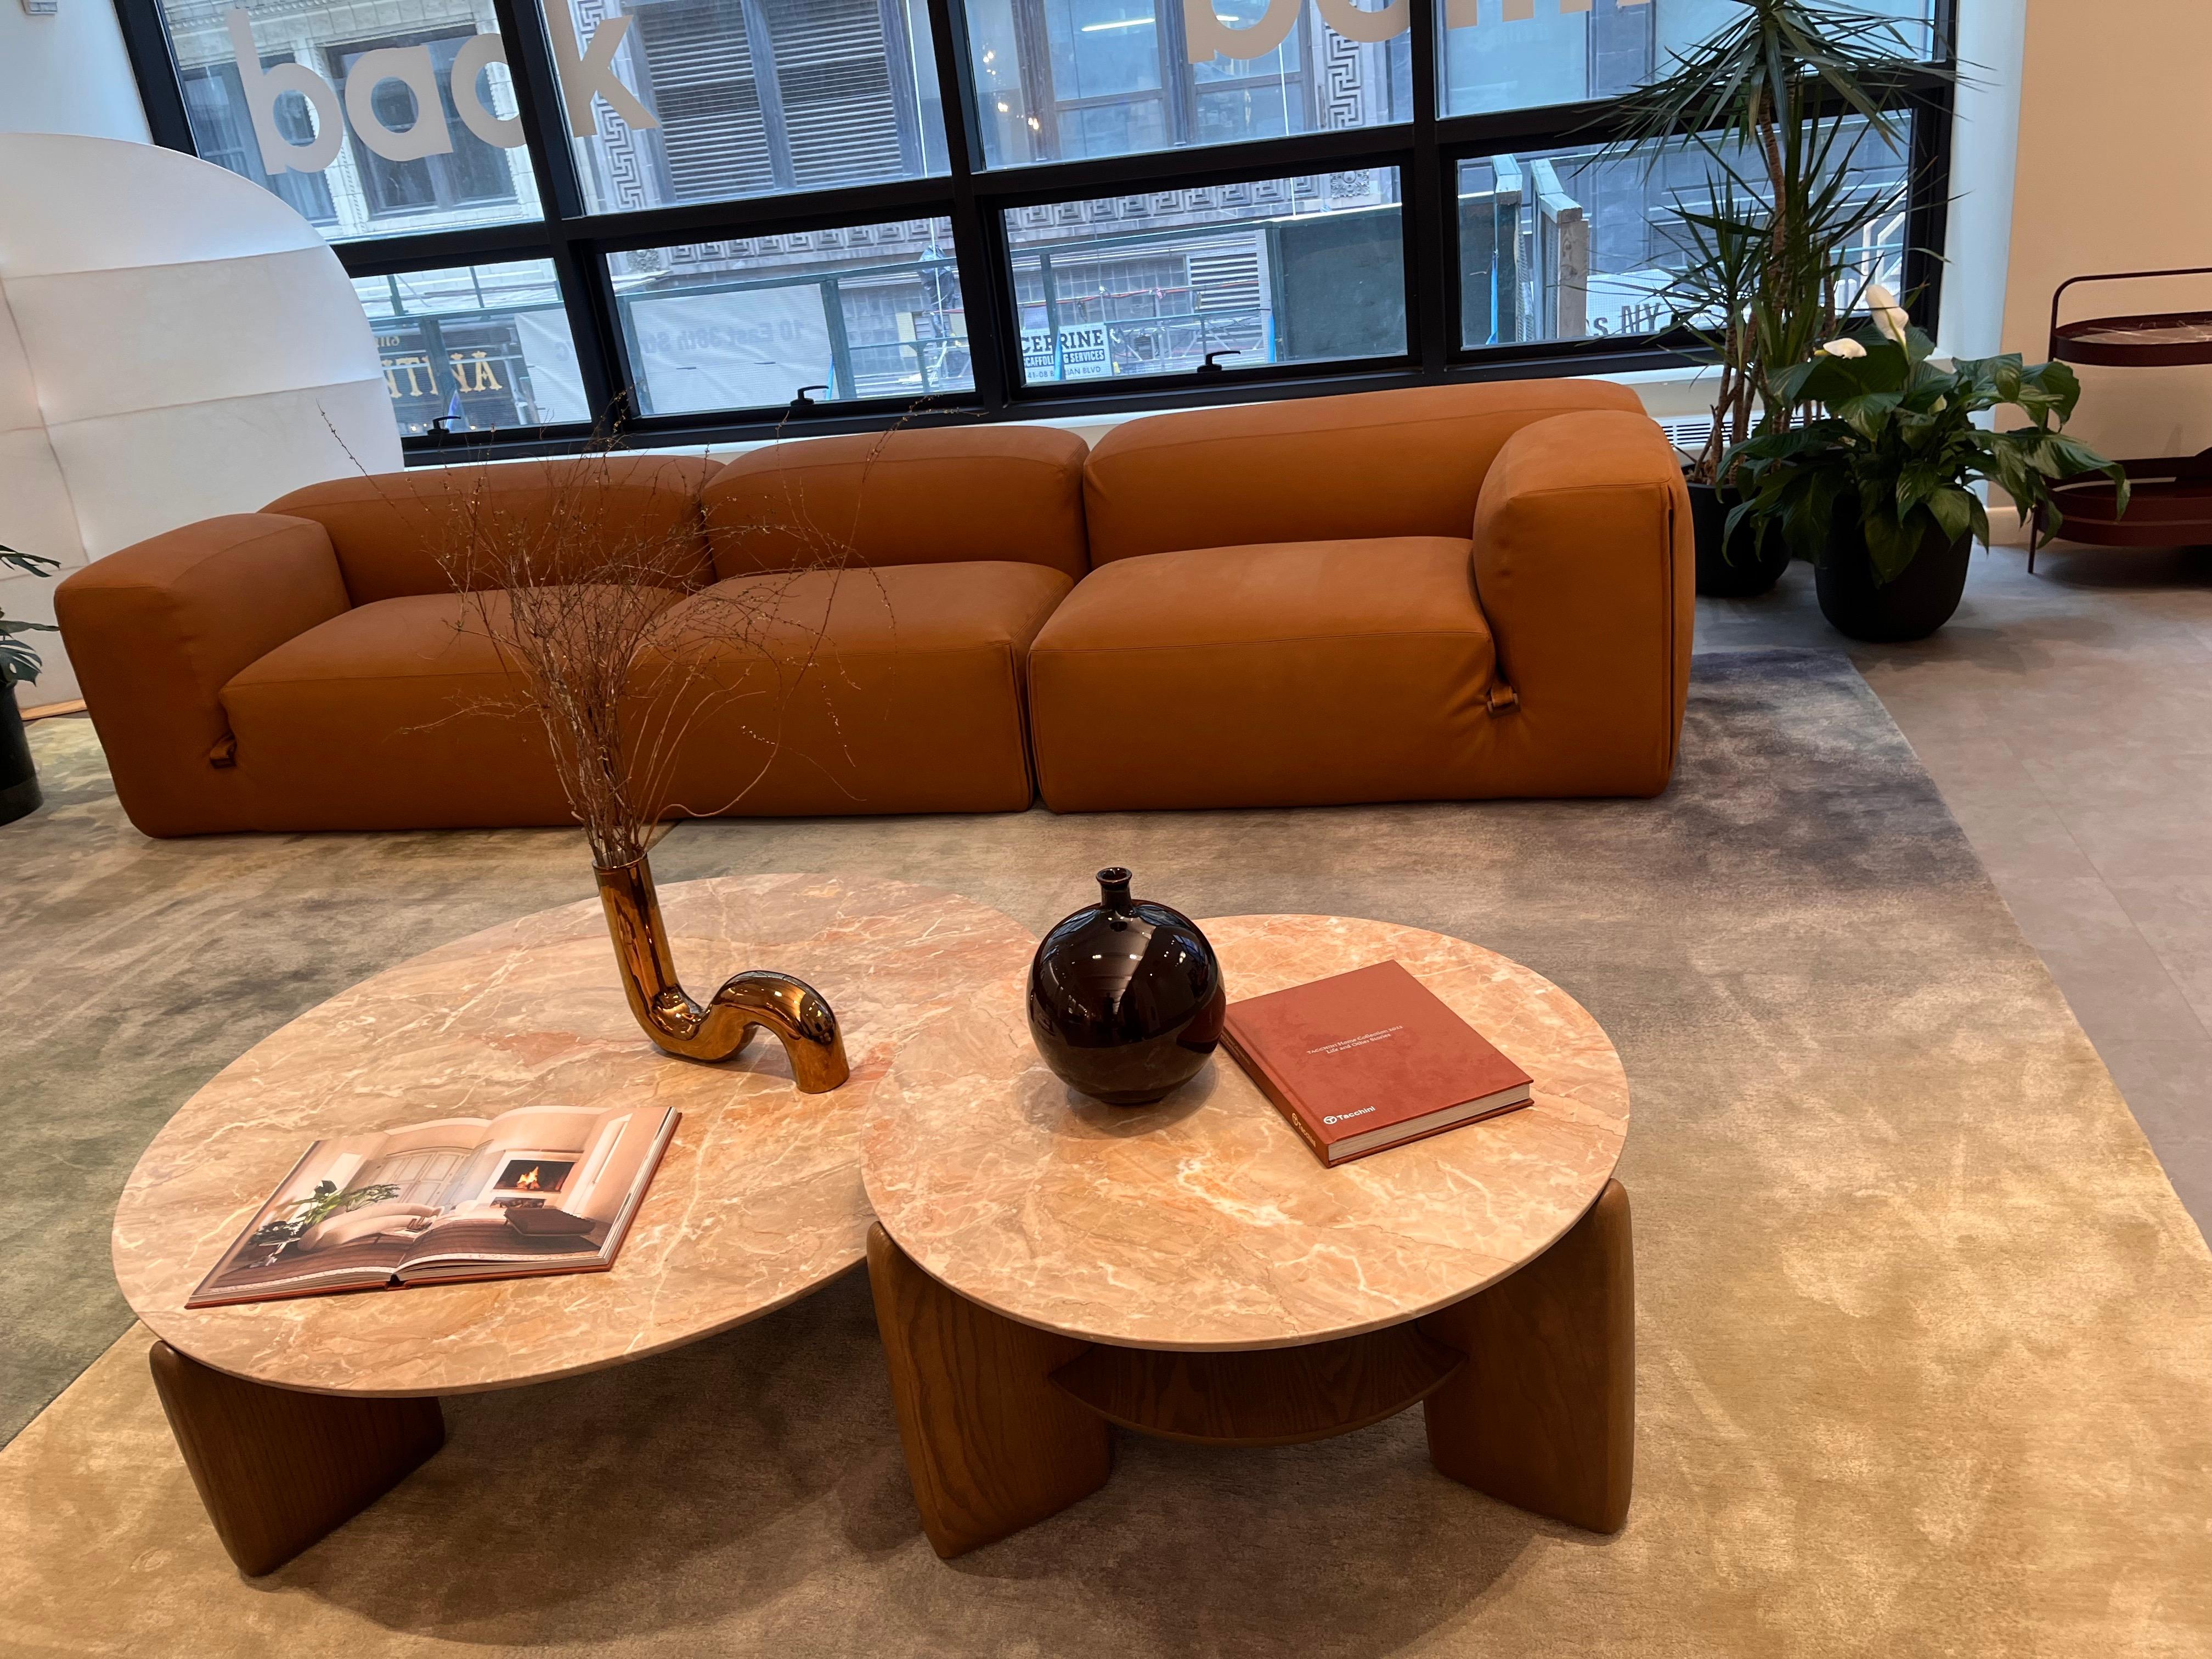  Tacchini Le Mura Leather  sofa & lounge chair by Mario Bellini in STOCK 8